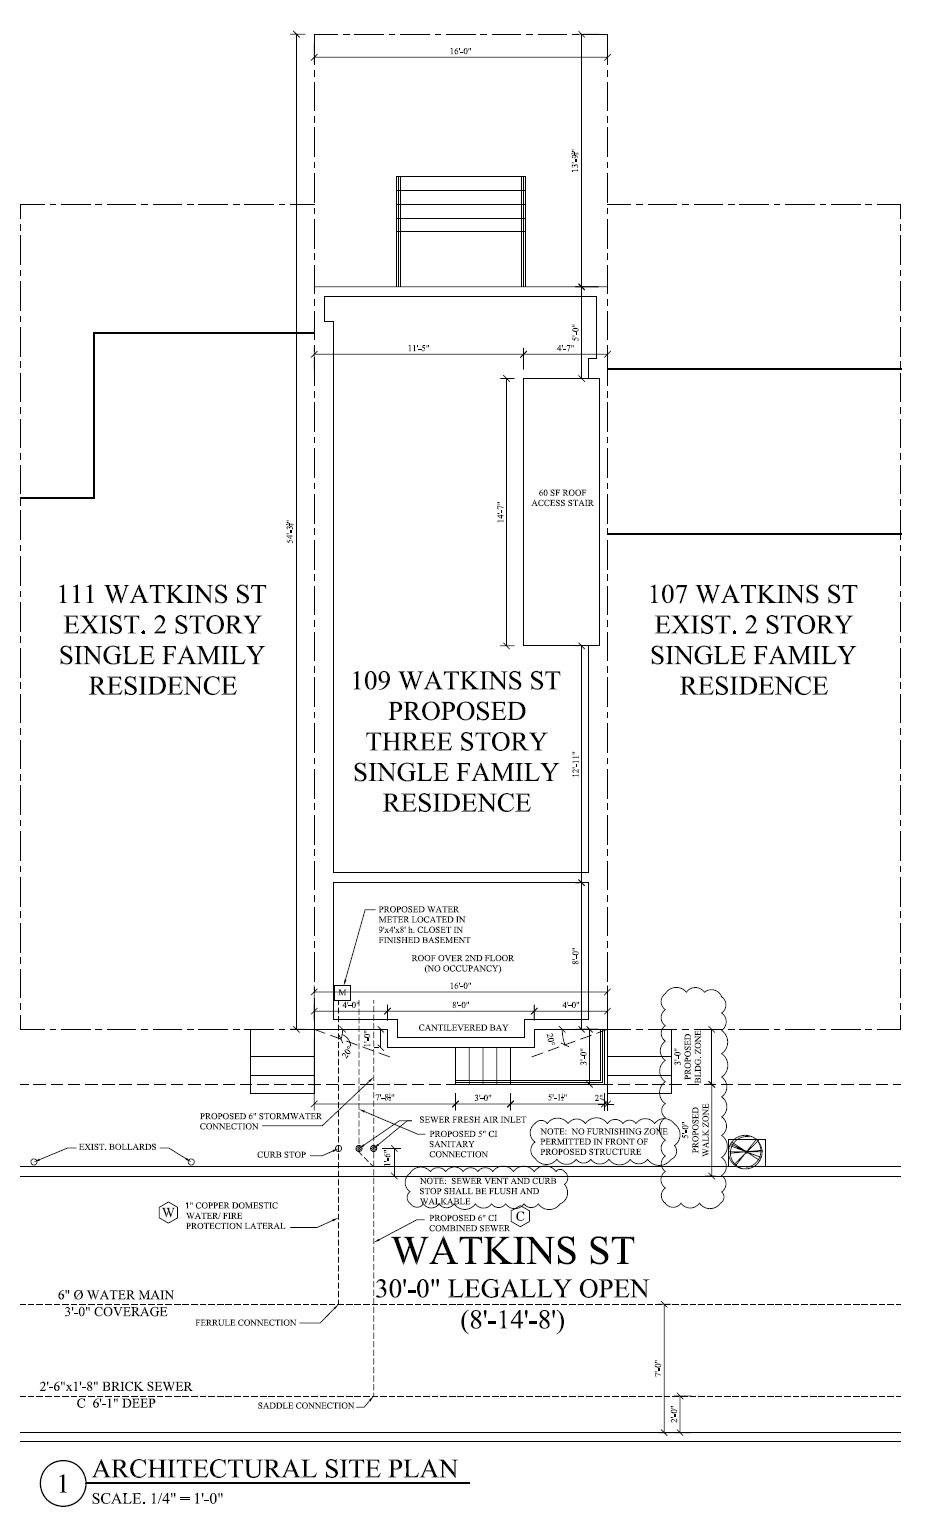 109 Watkins Street. Site plan. Credit: MC Architectural via the City of Philadelphia Department of Planning and Development